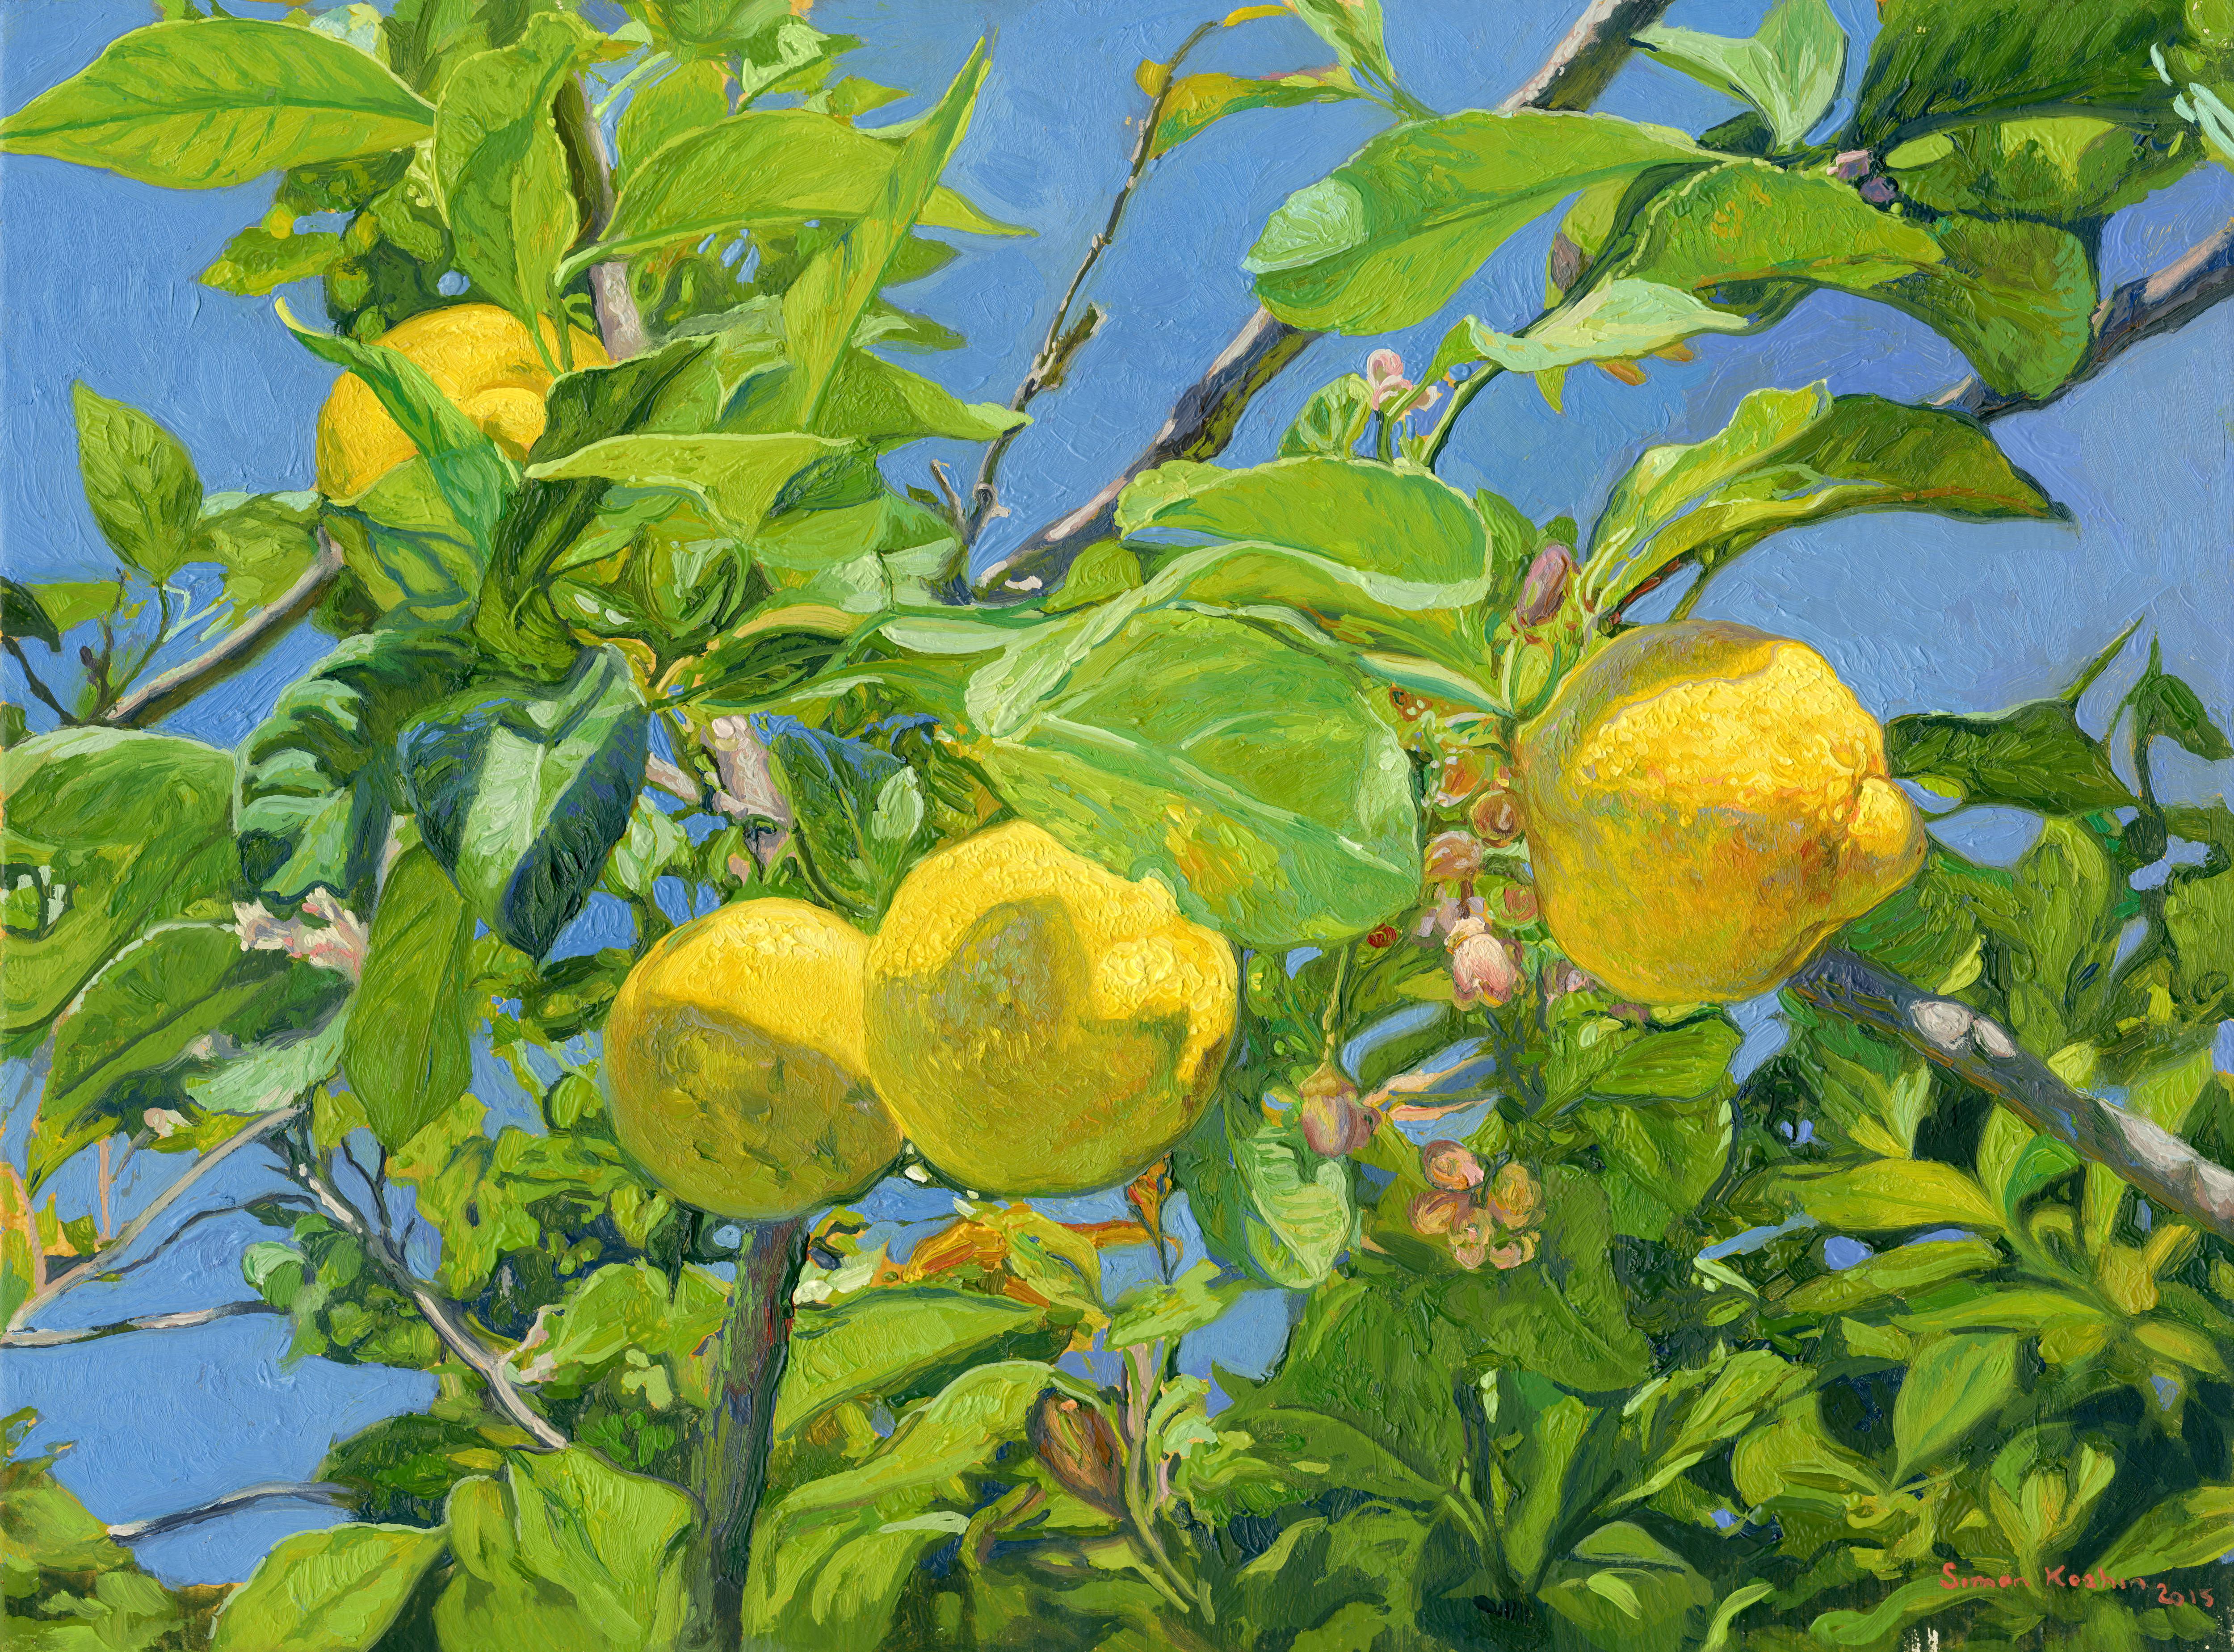 Simon Kozhin Landscape Painting - Lemons, Oil Painting Impressionist Style, Still life fruit, Citrus garden trees